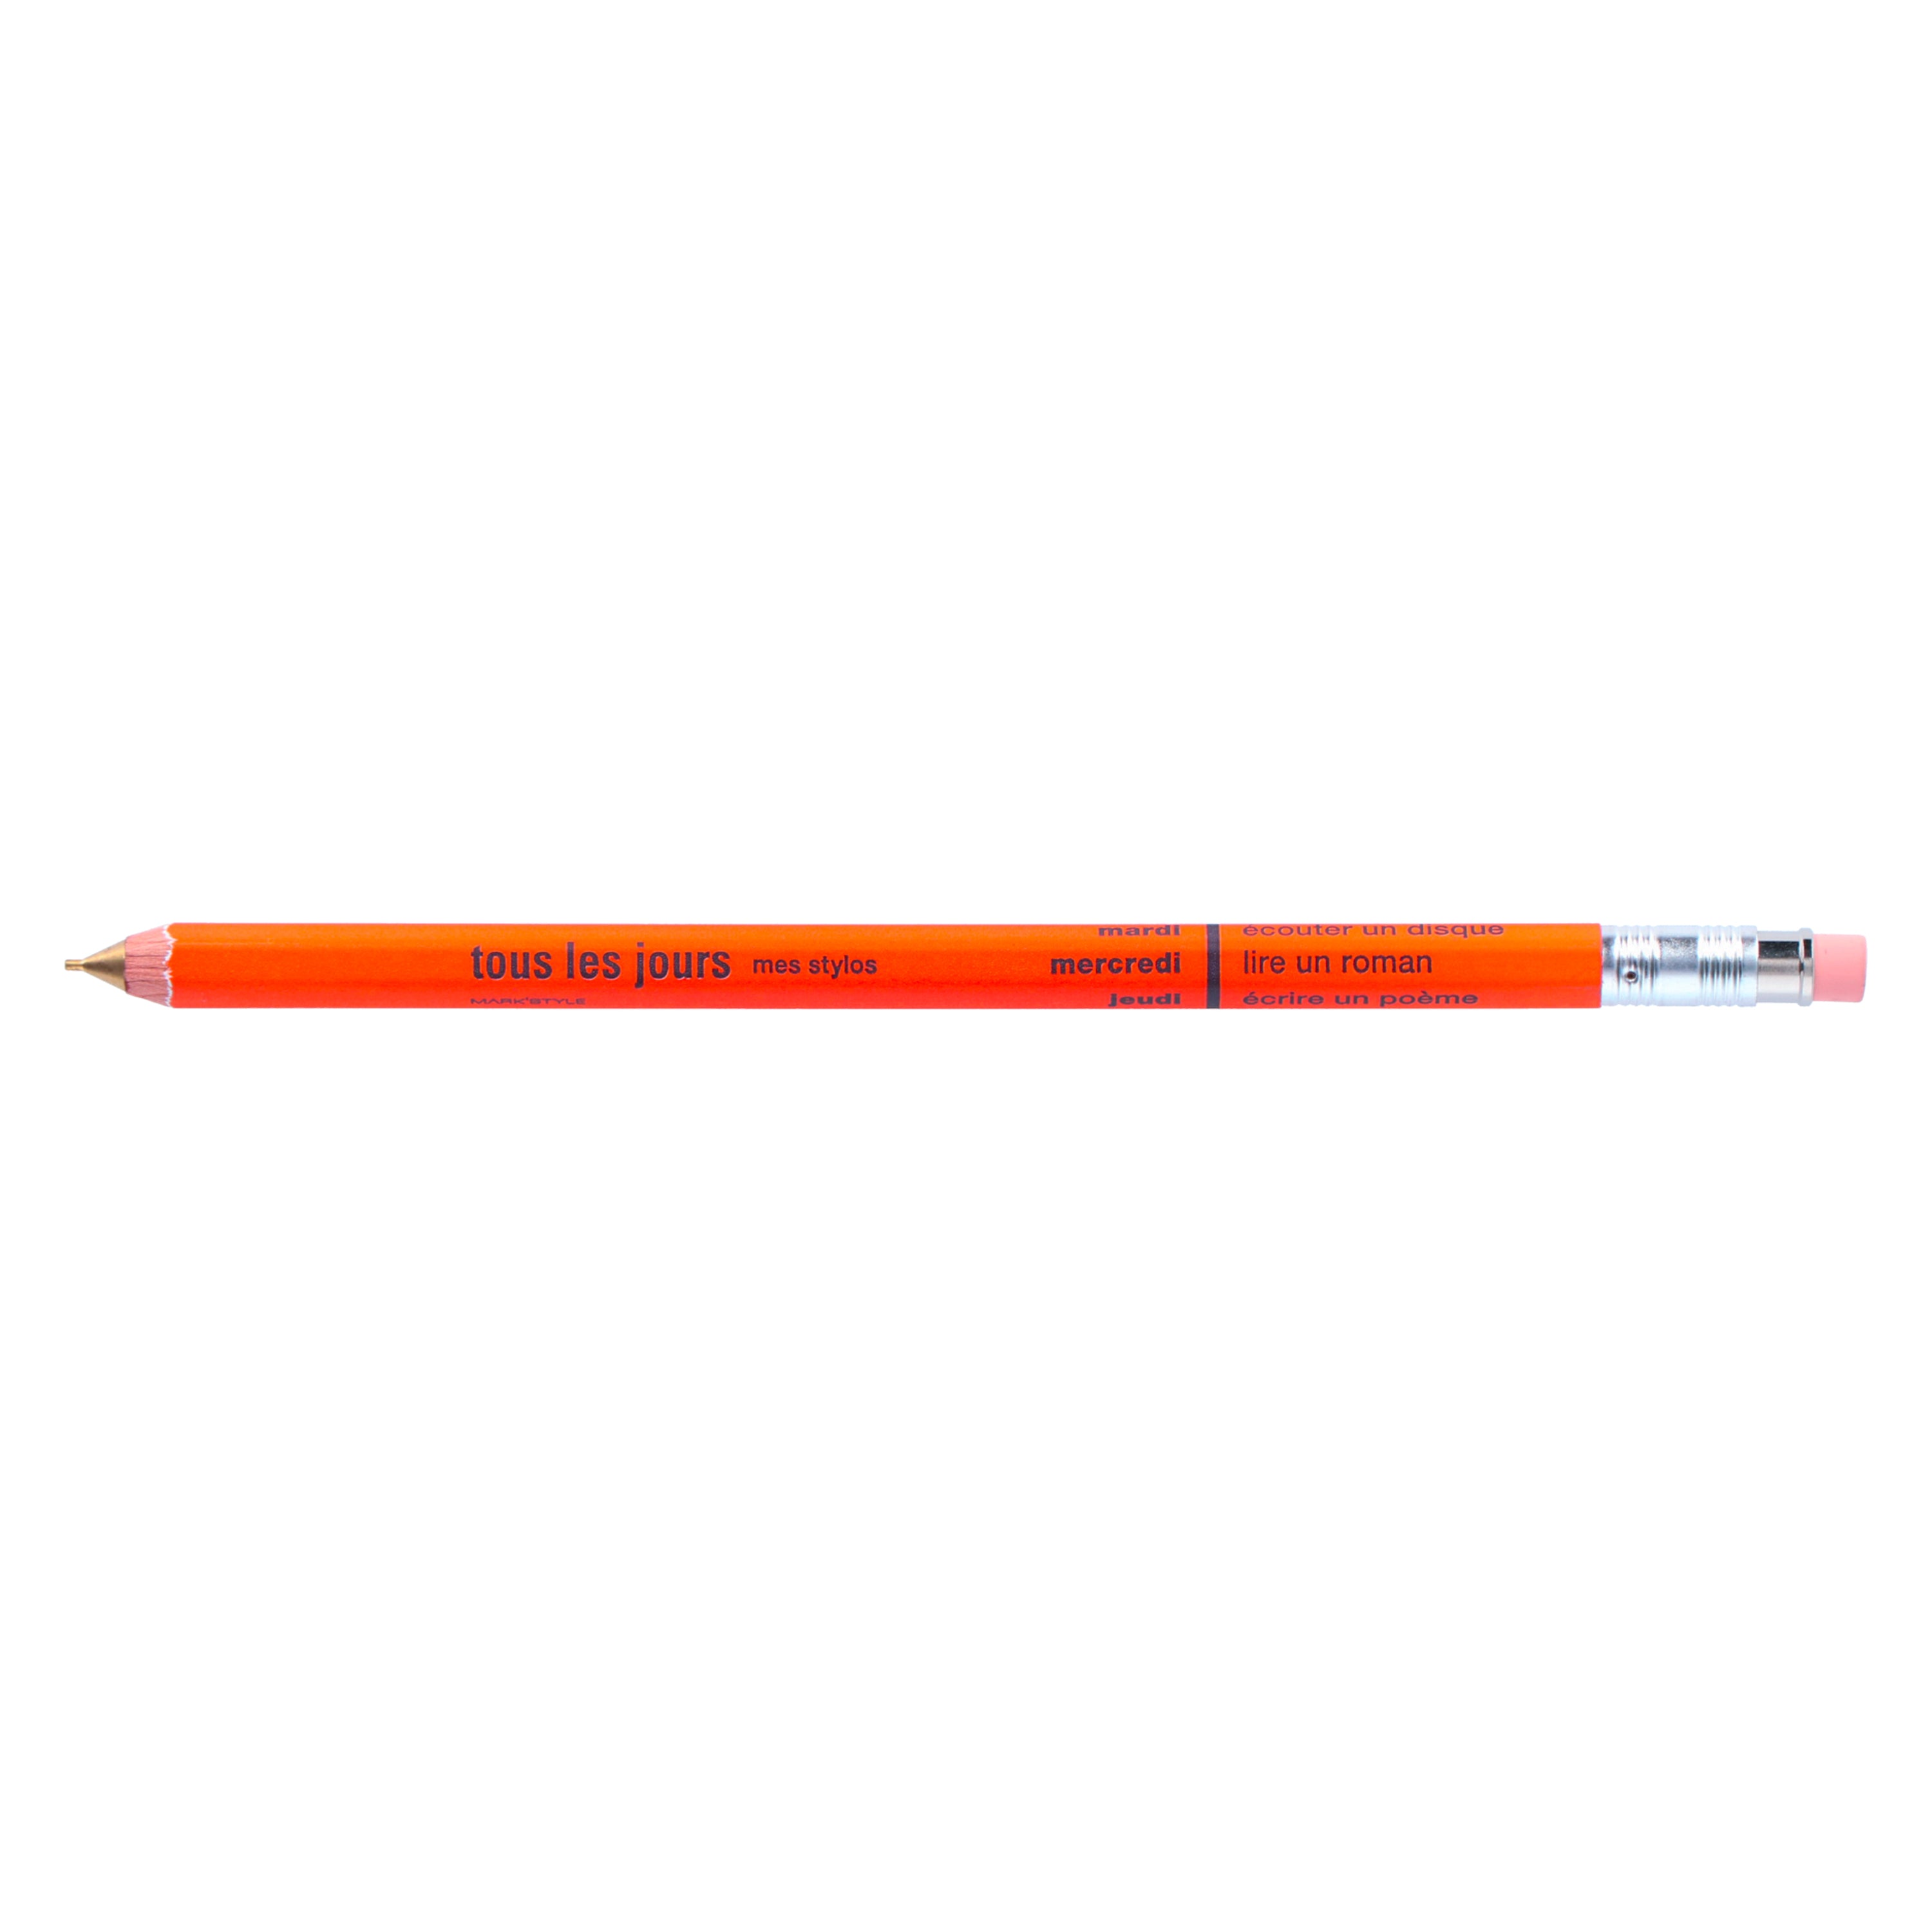 DAY Mechanical Pencil with Eraser / Orange